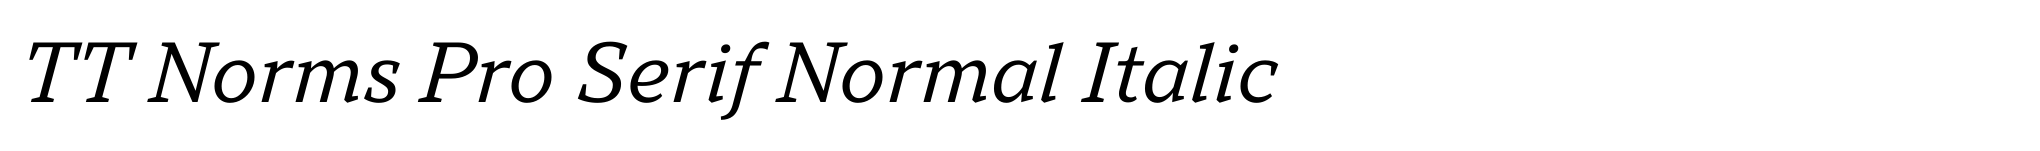 TT Norms Pro Serif Normal Italic image